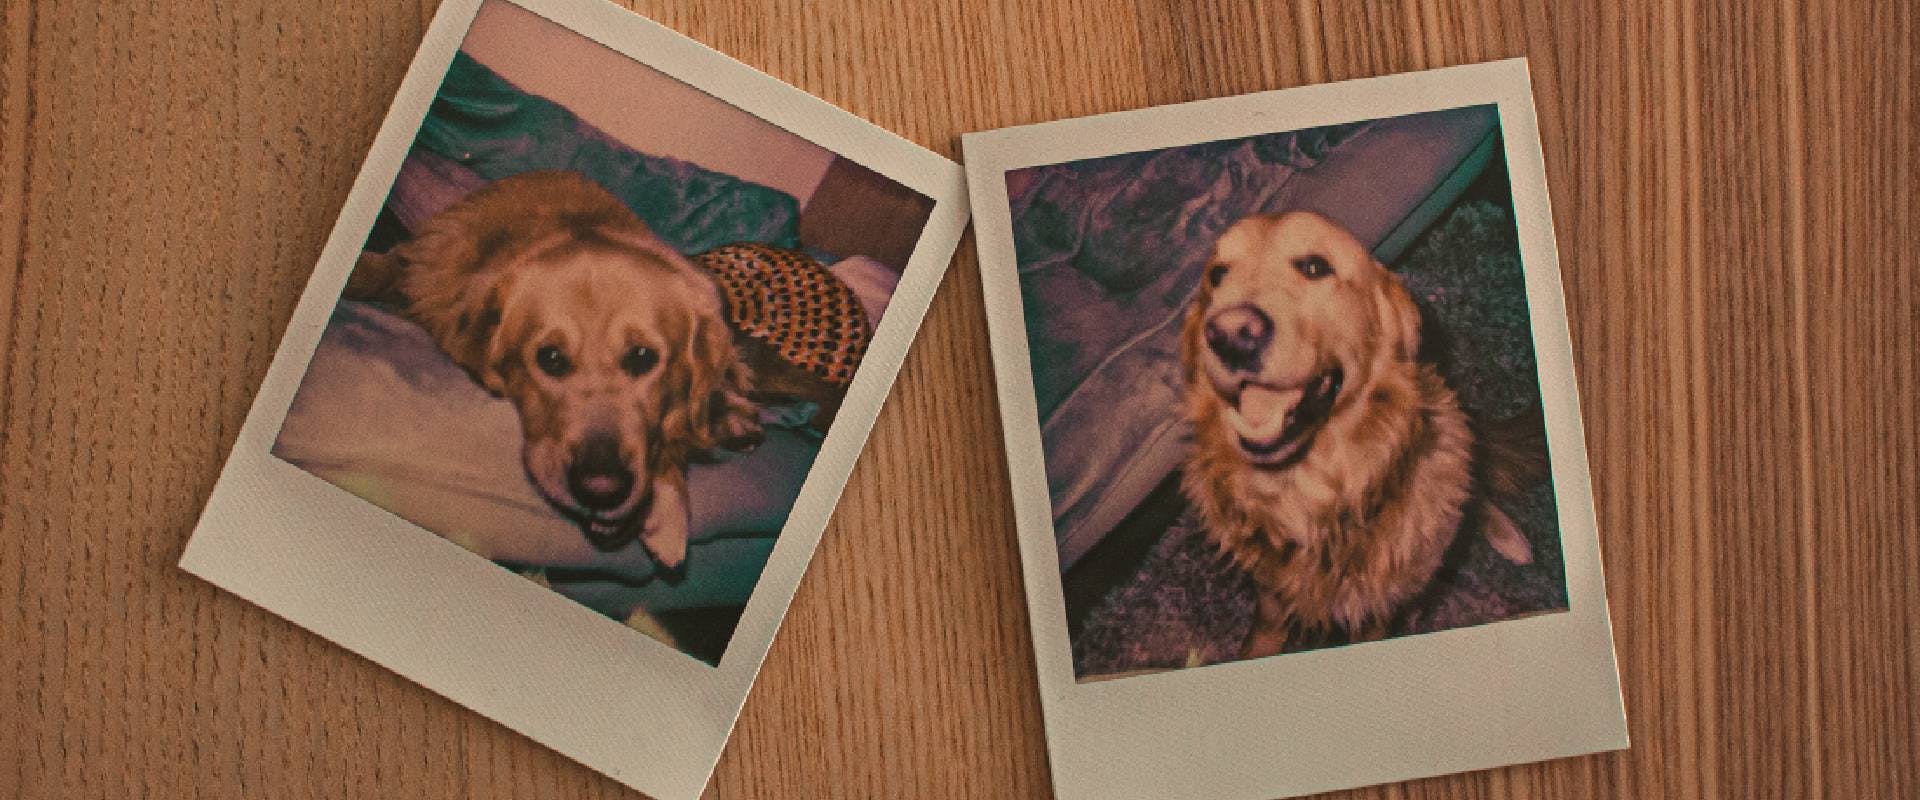 Polaroids of a Golden Retriever dog